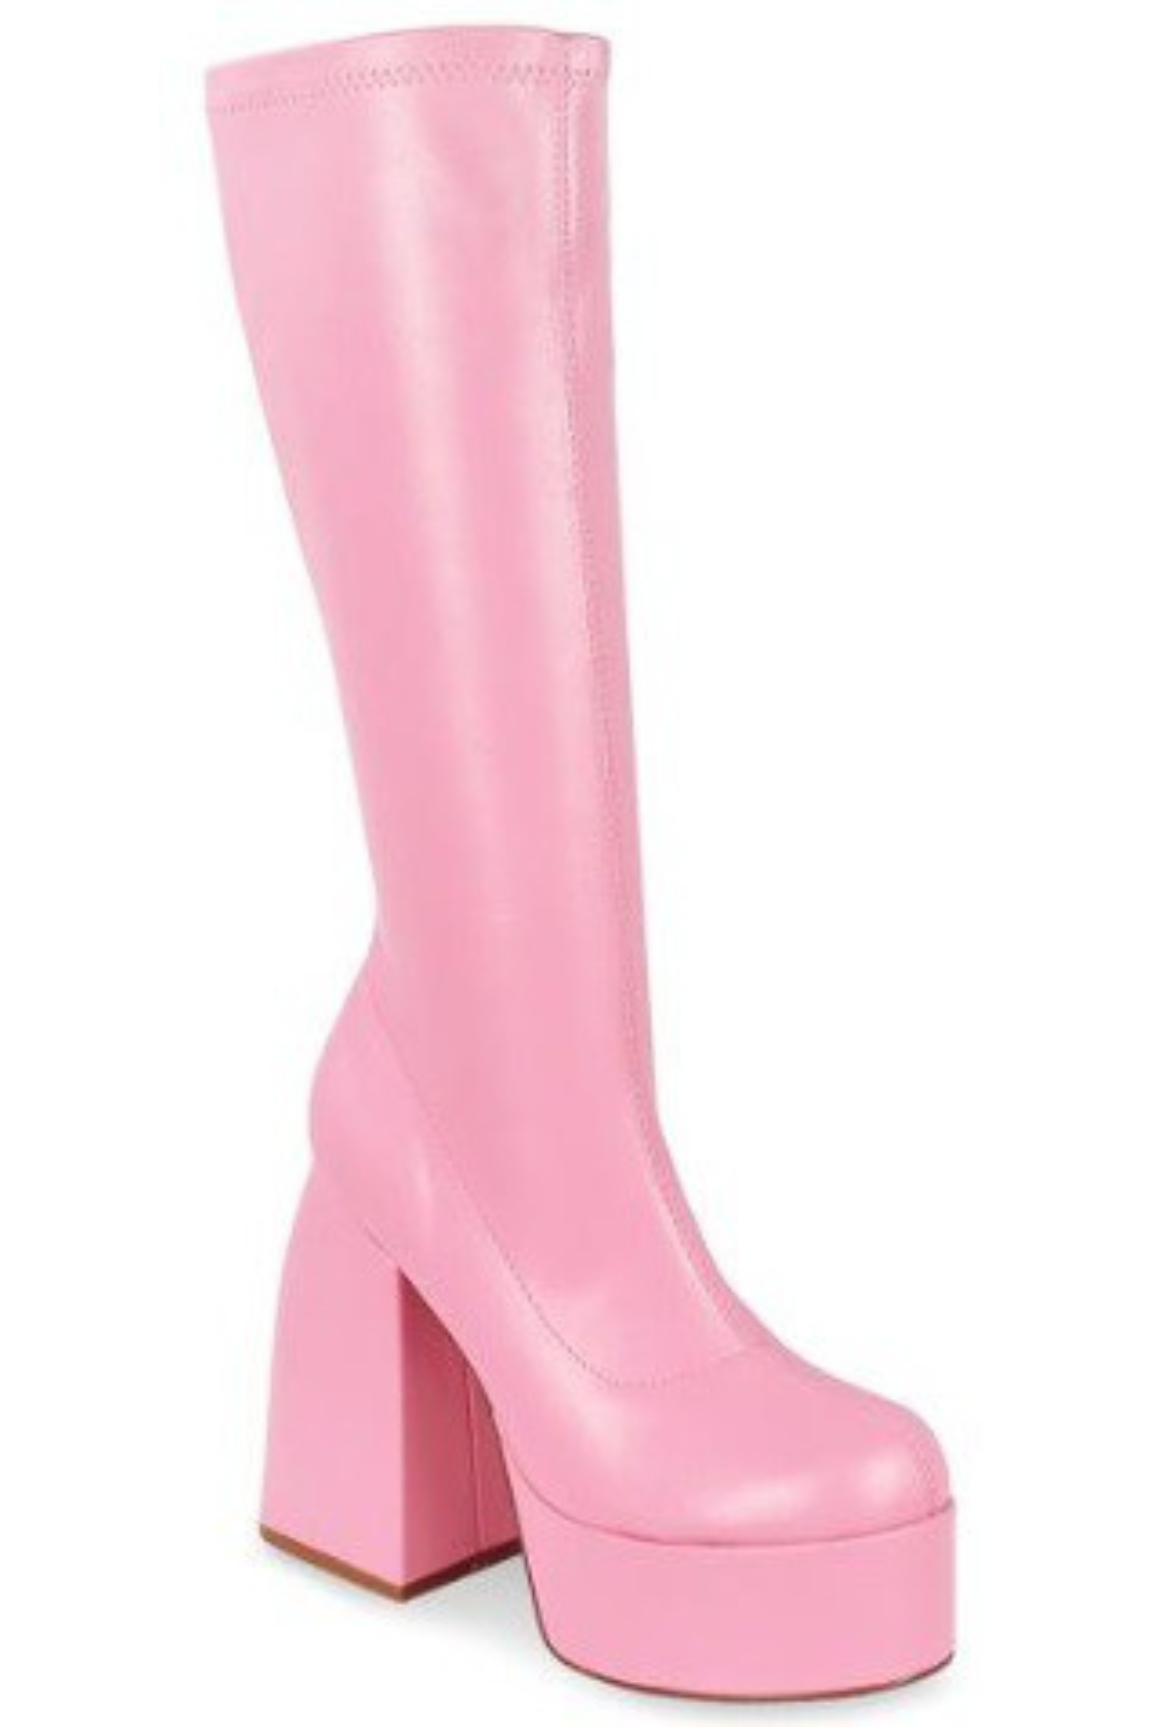 Platform Chunky High Heel Boots (Pink)